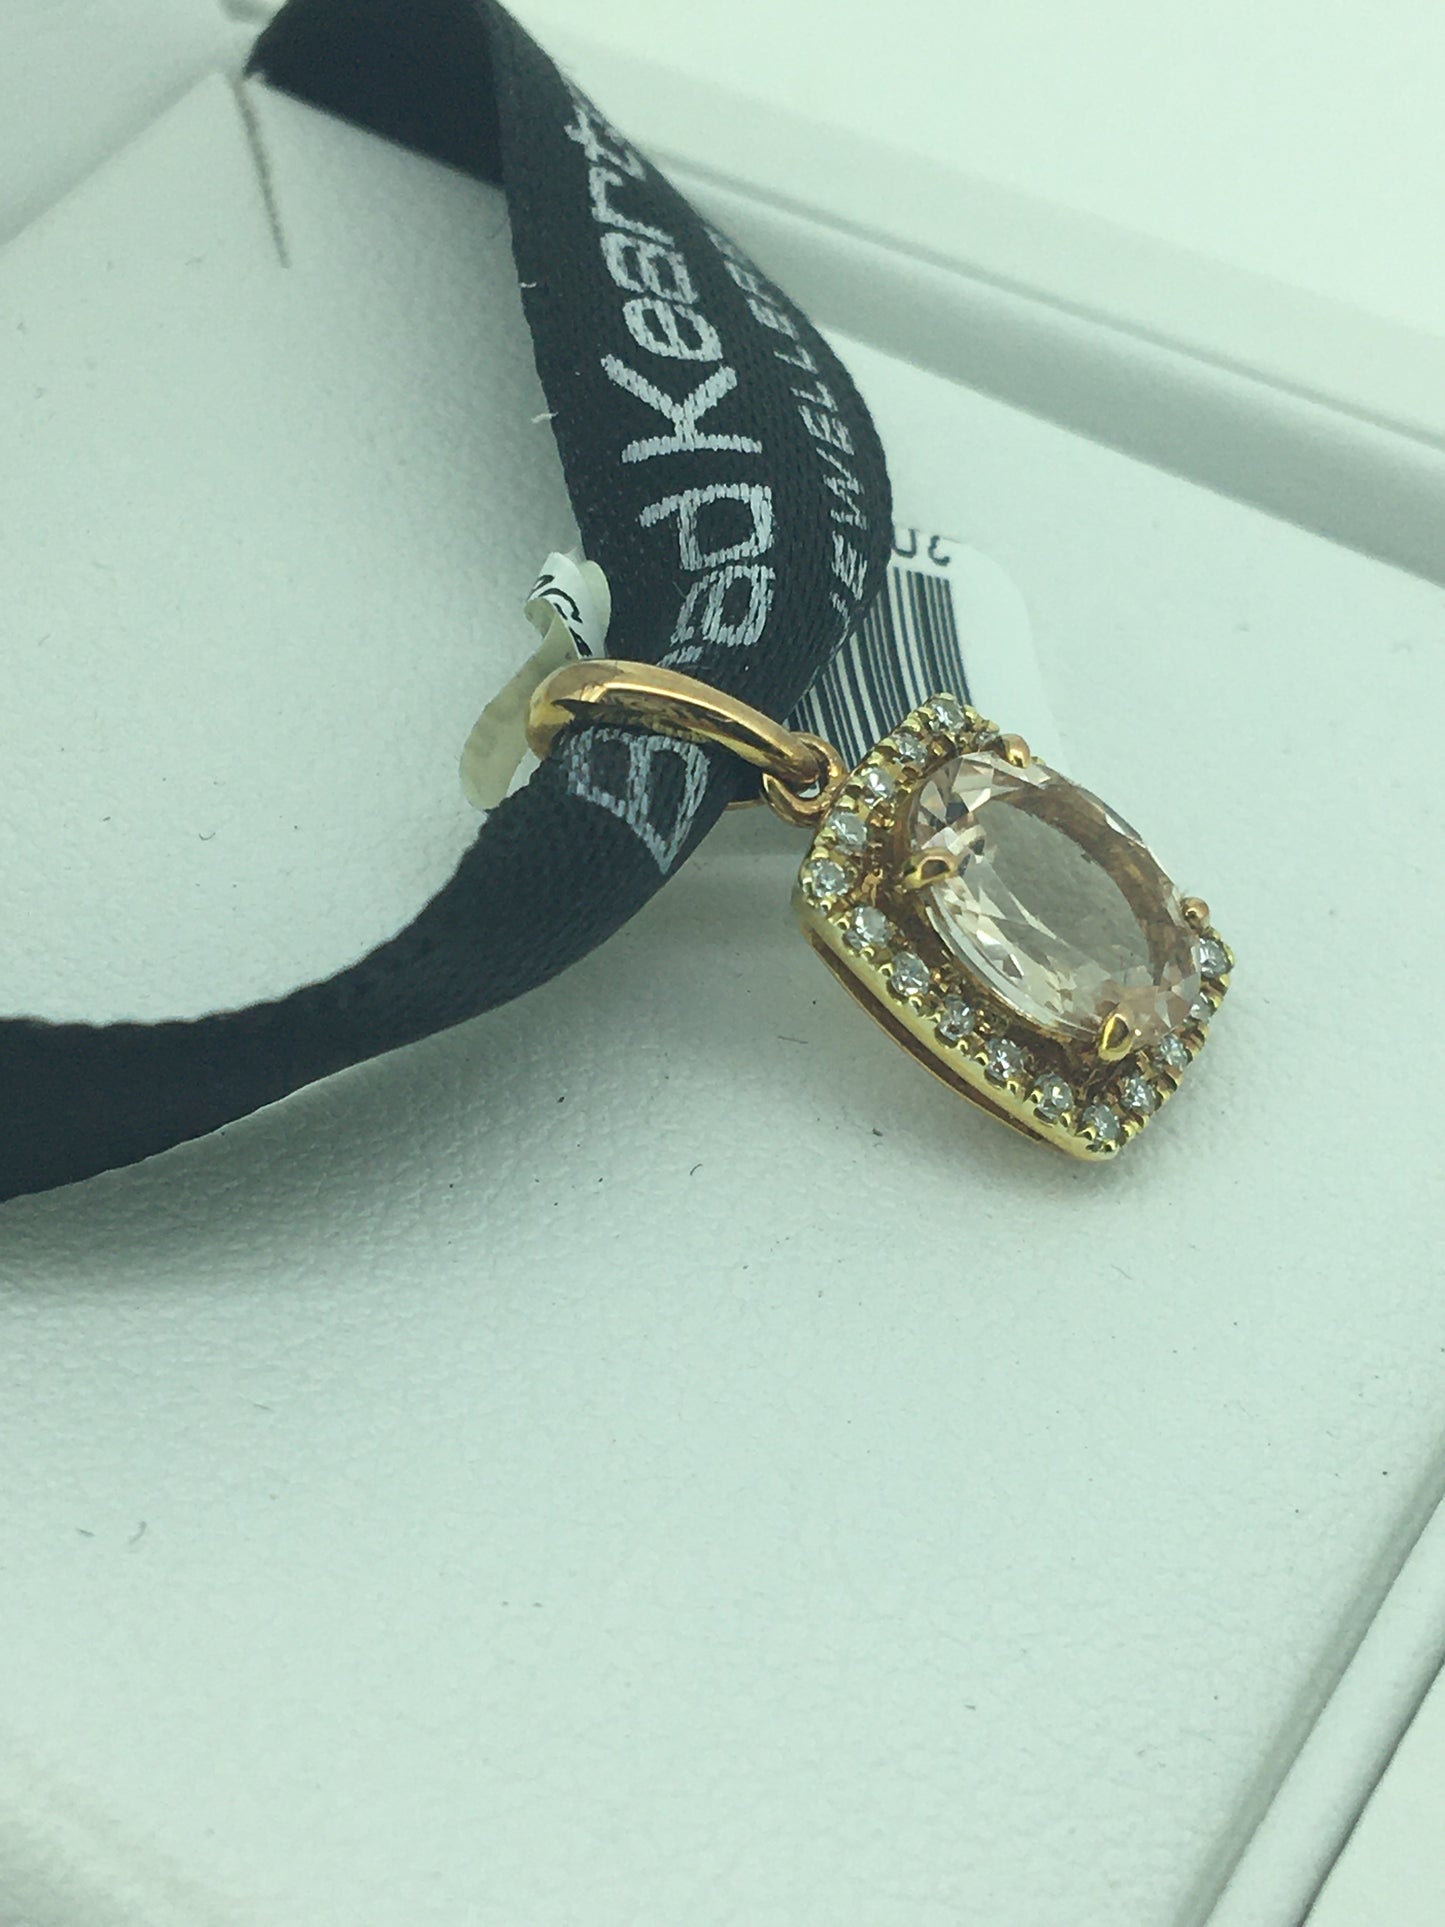 9ct Rose Gold Morganite & Diamond Pendant